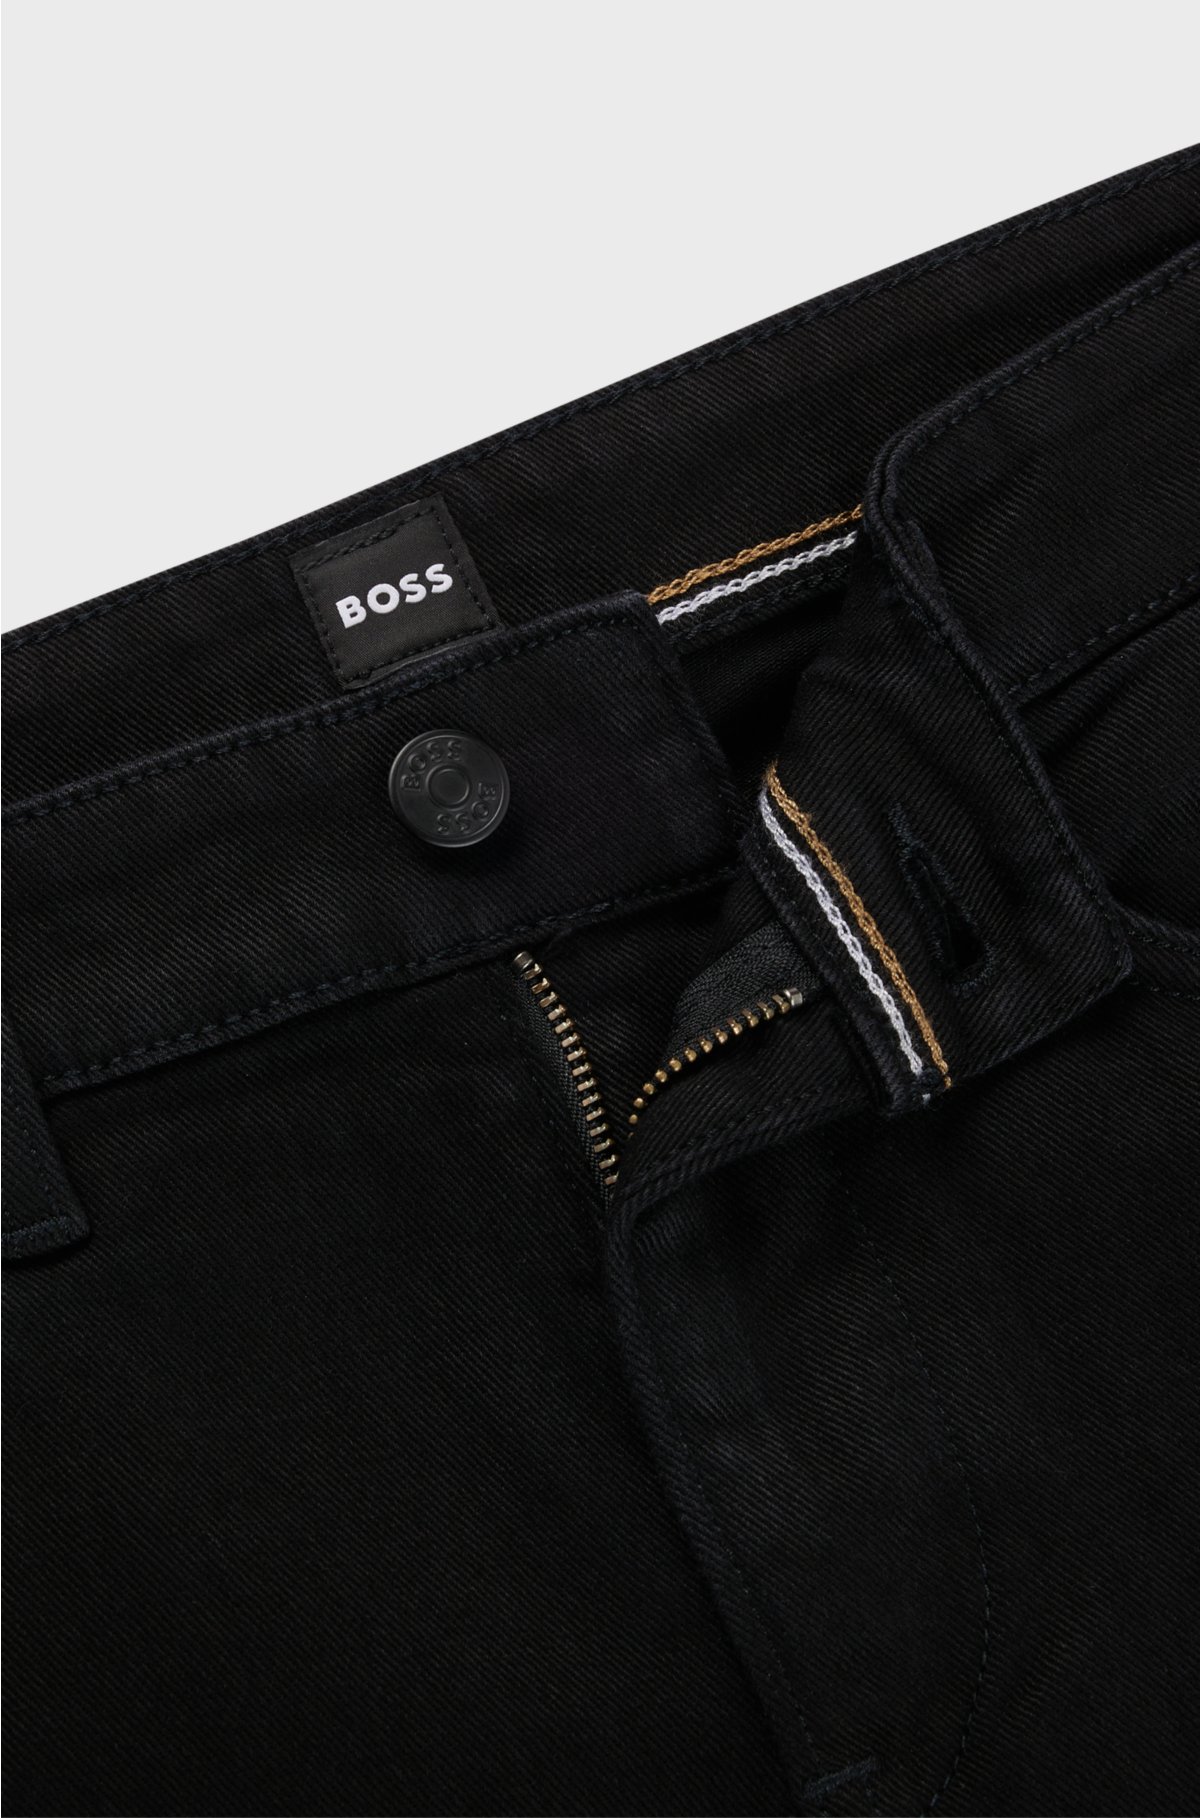 Slim-fit jeans in black super-soft Italian denim, Black